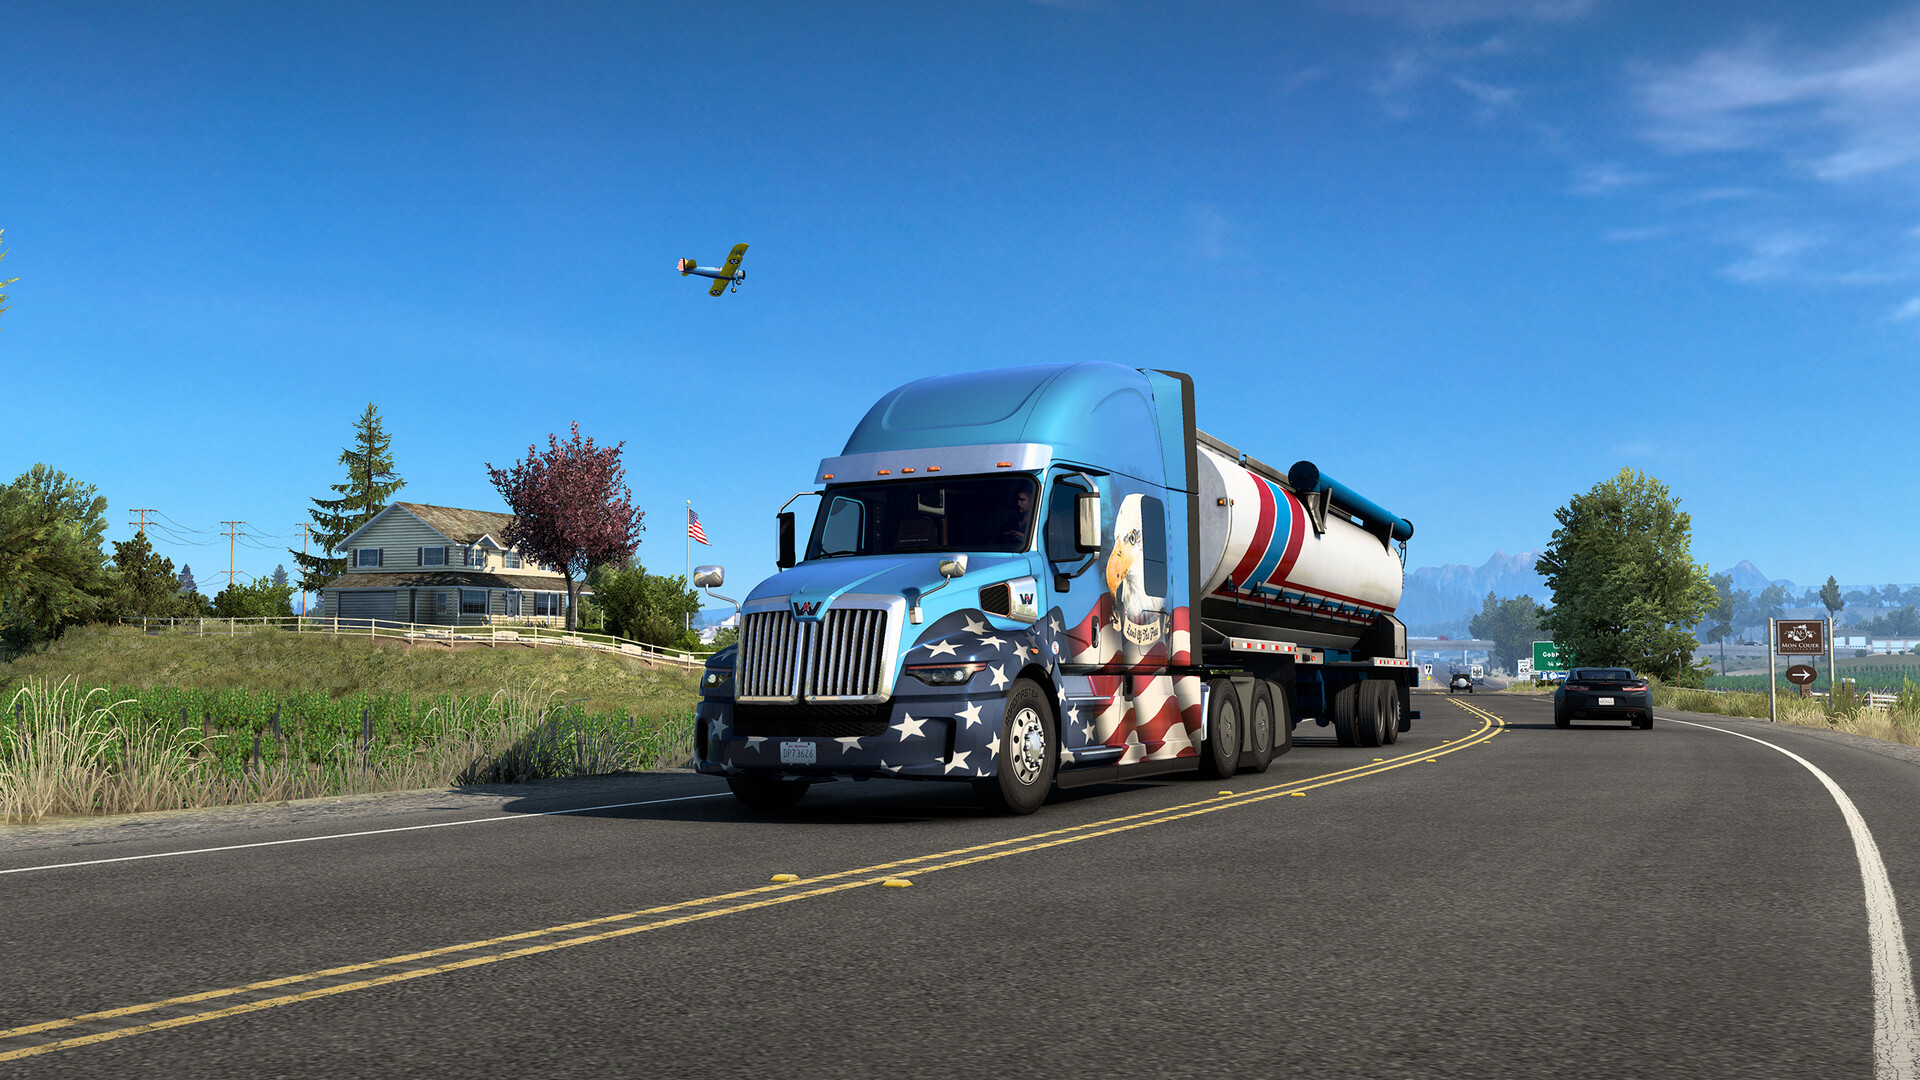 American Truck Simulator Northwest Bundle Steam Account